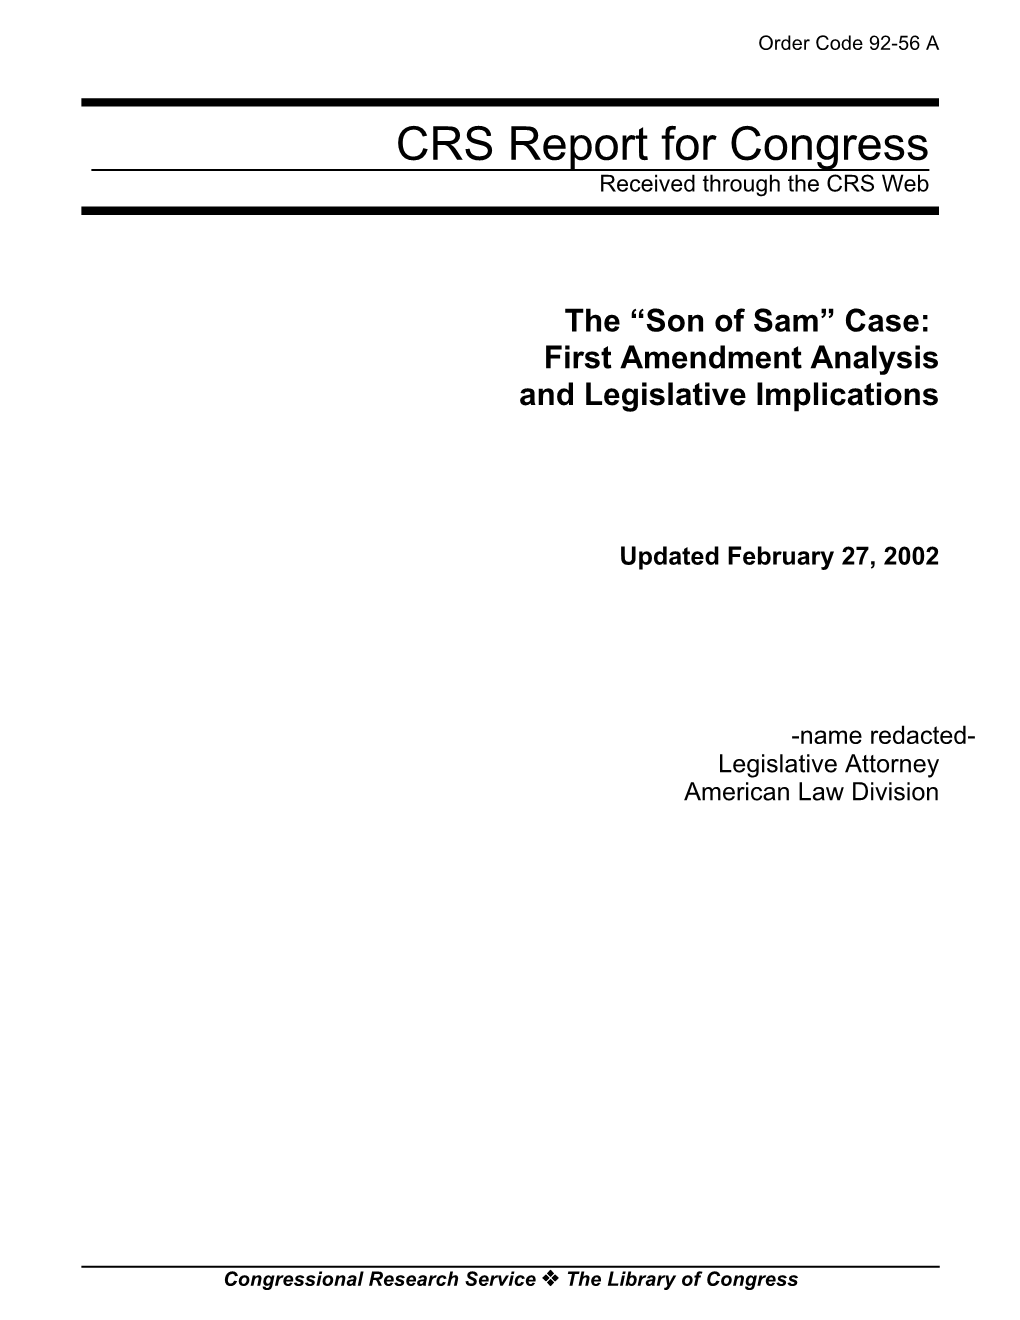 "Son of Sam" Case: First Amendment Analysis and Legislative Implications